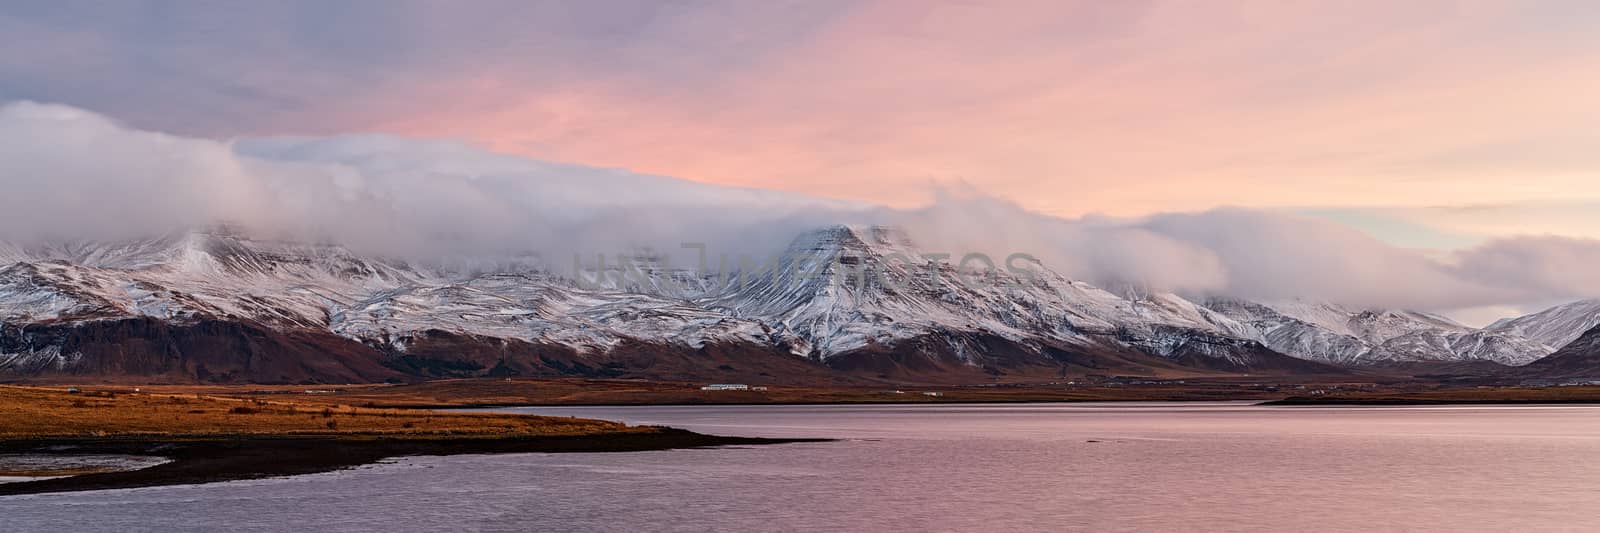 Sunrise from Reykjavik, Iceland by LuigiMorbidelli